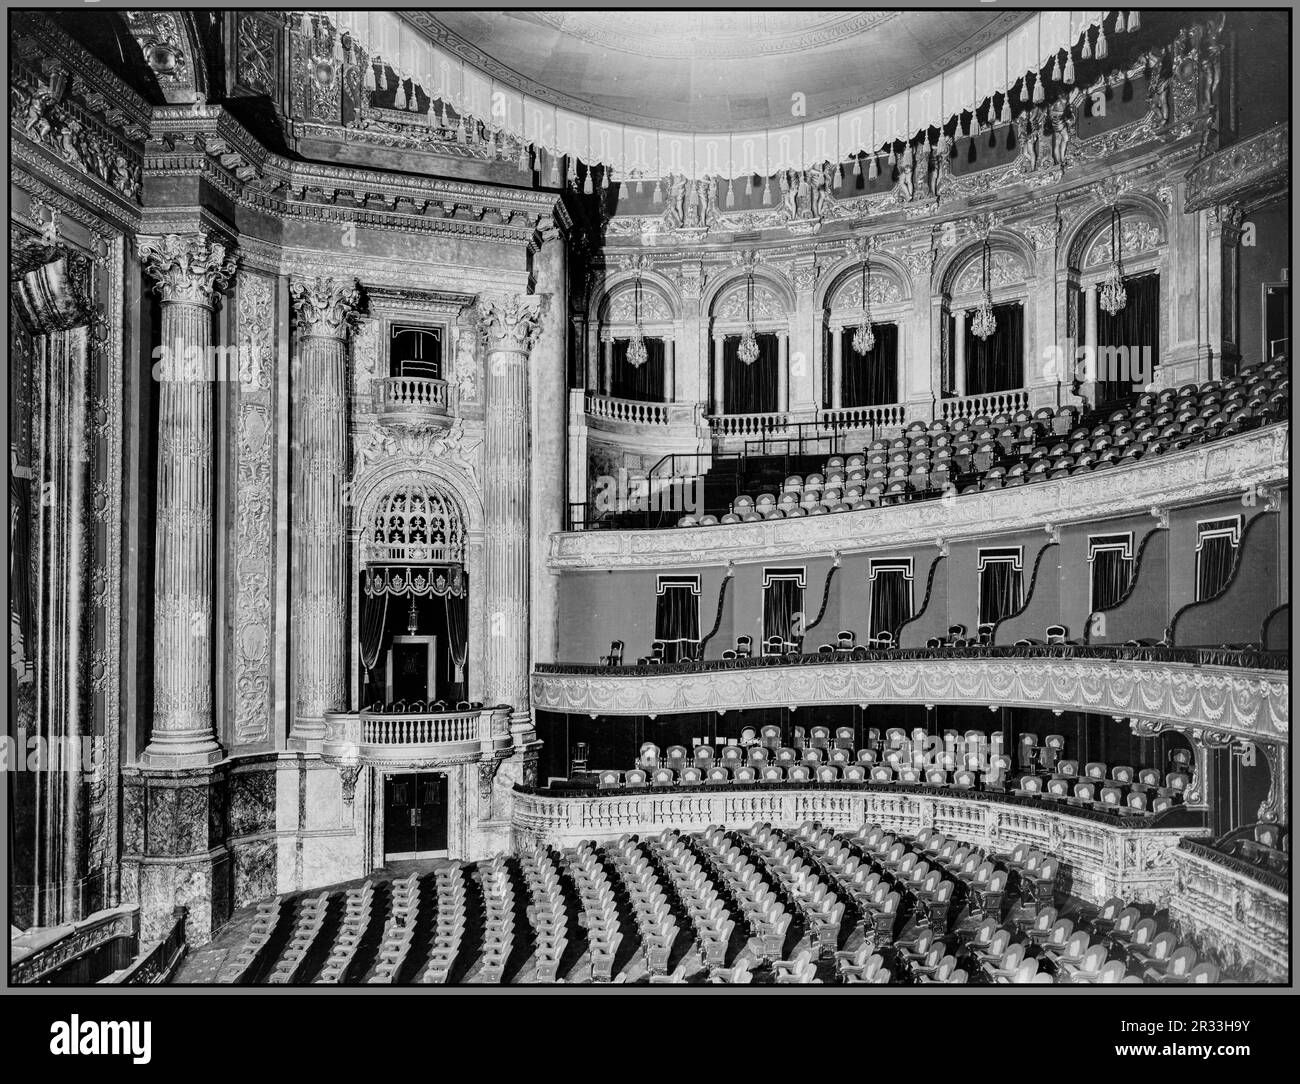 NEW THEATER NY INTERIOR STORICO 1900s Auditorium del New Theater, New York City America USA 1910 Foto Stock